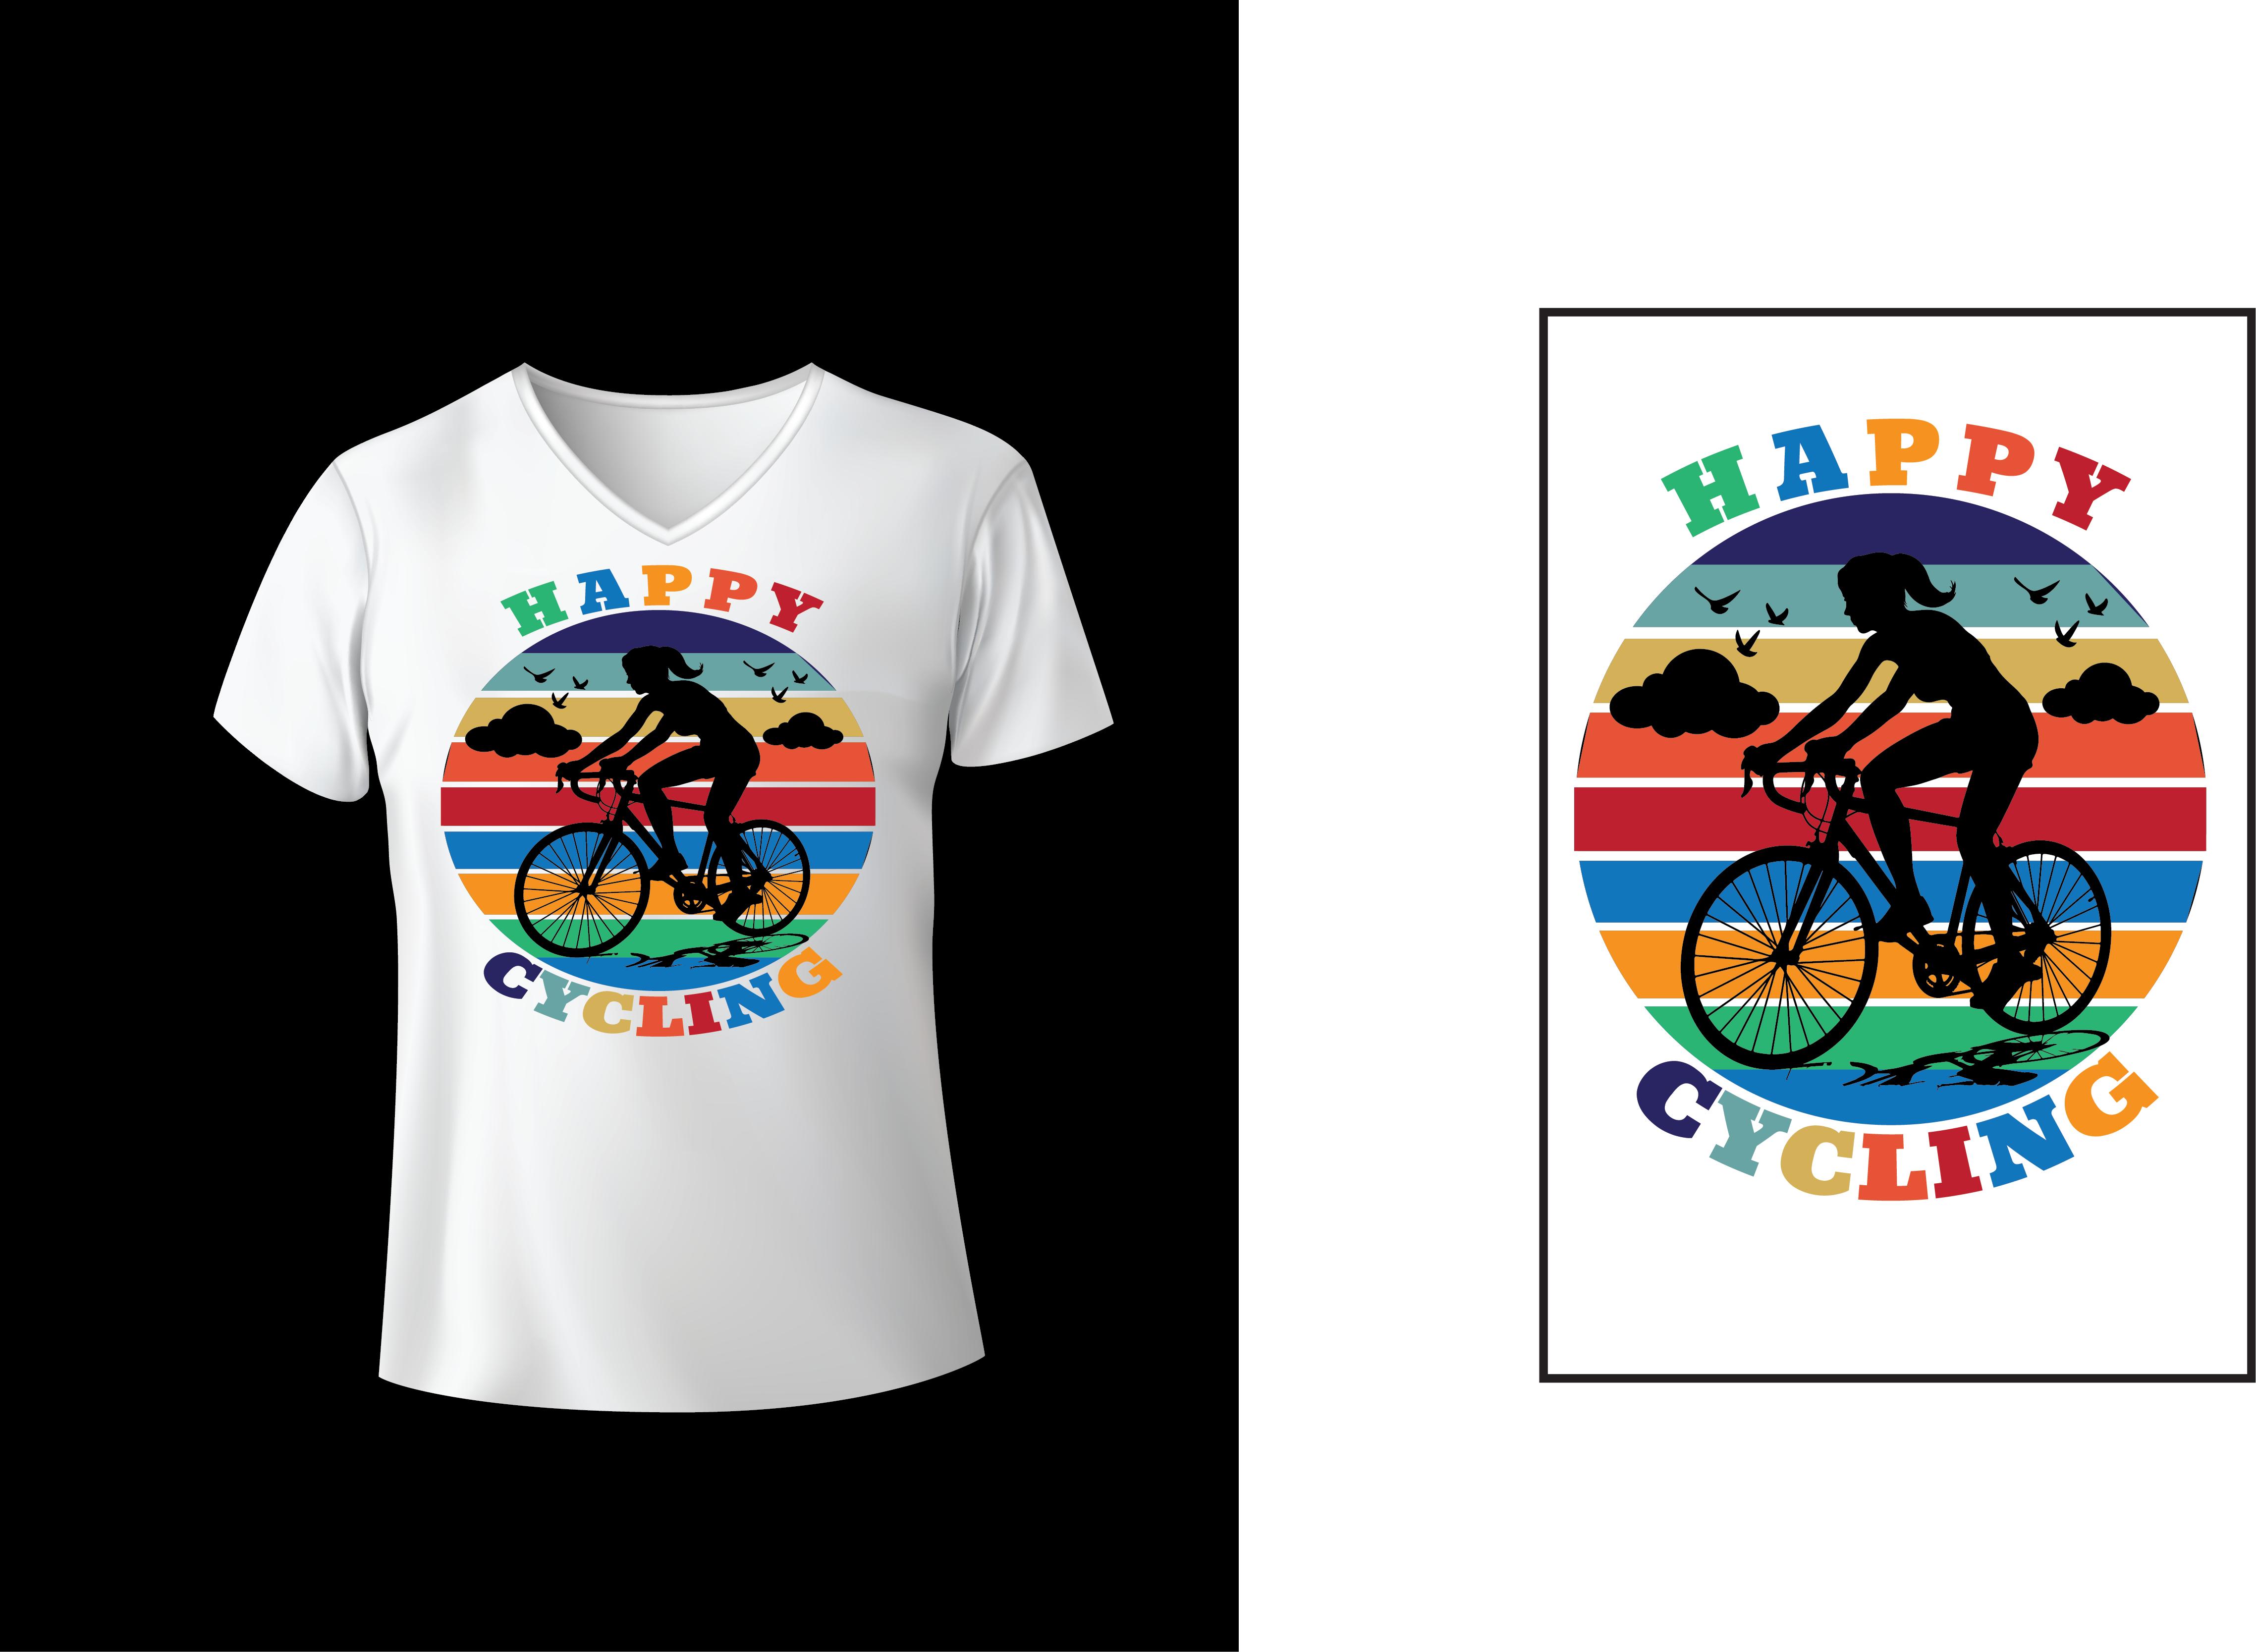 Happy Cycling T-shirt Design